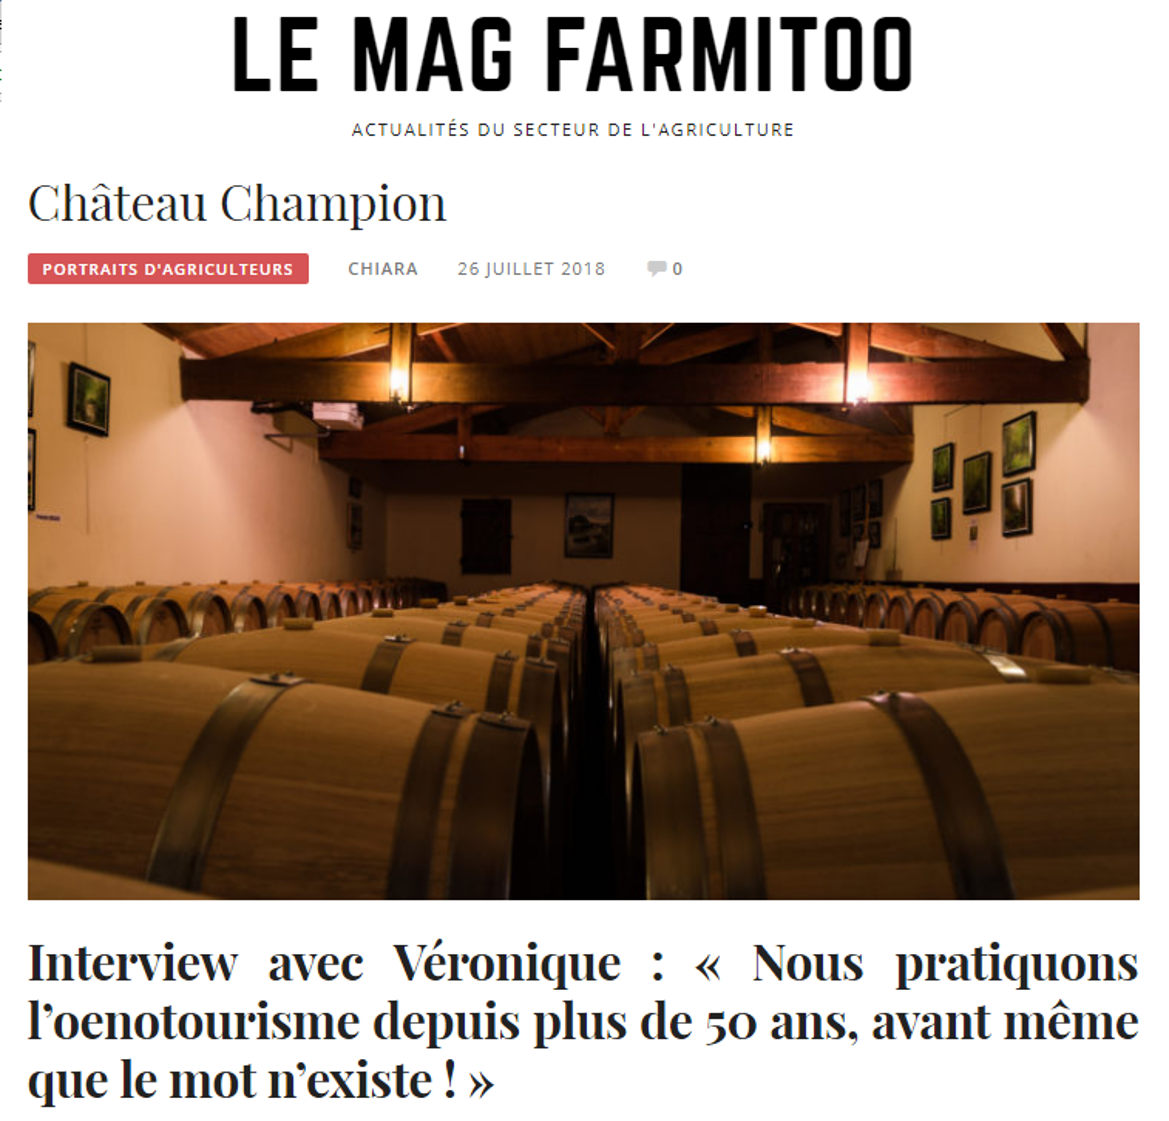 Le MAG FARMITOO parle de Château Champion !